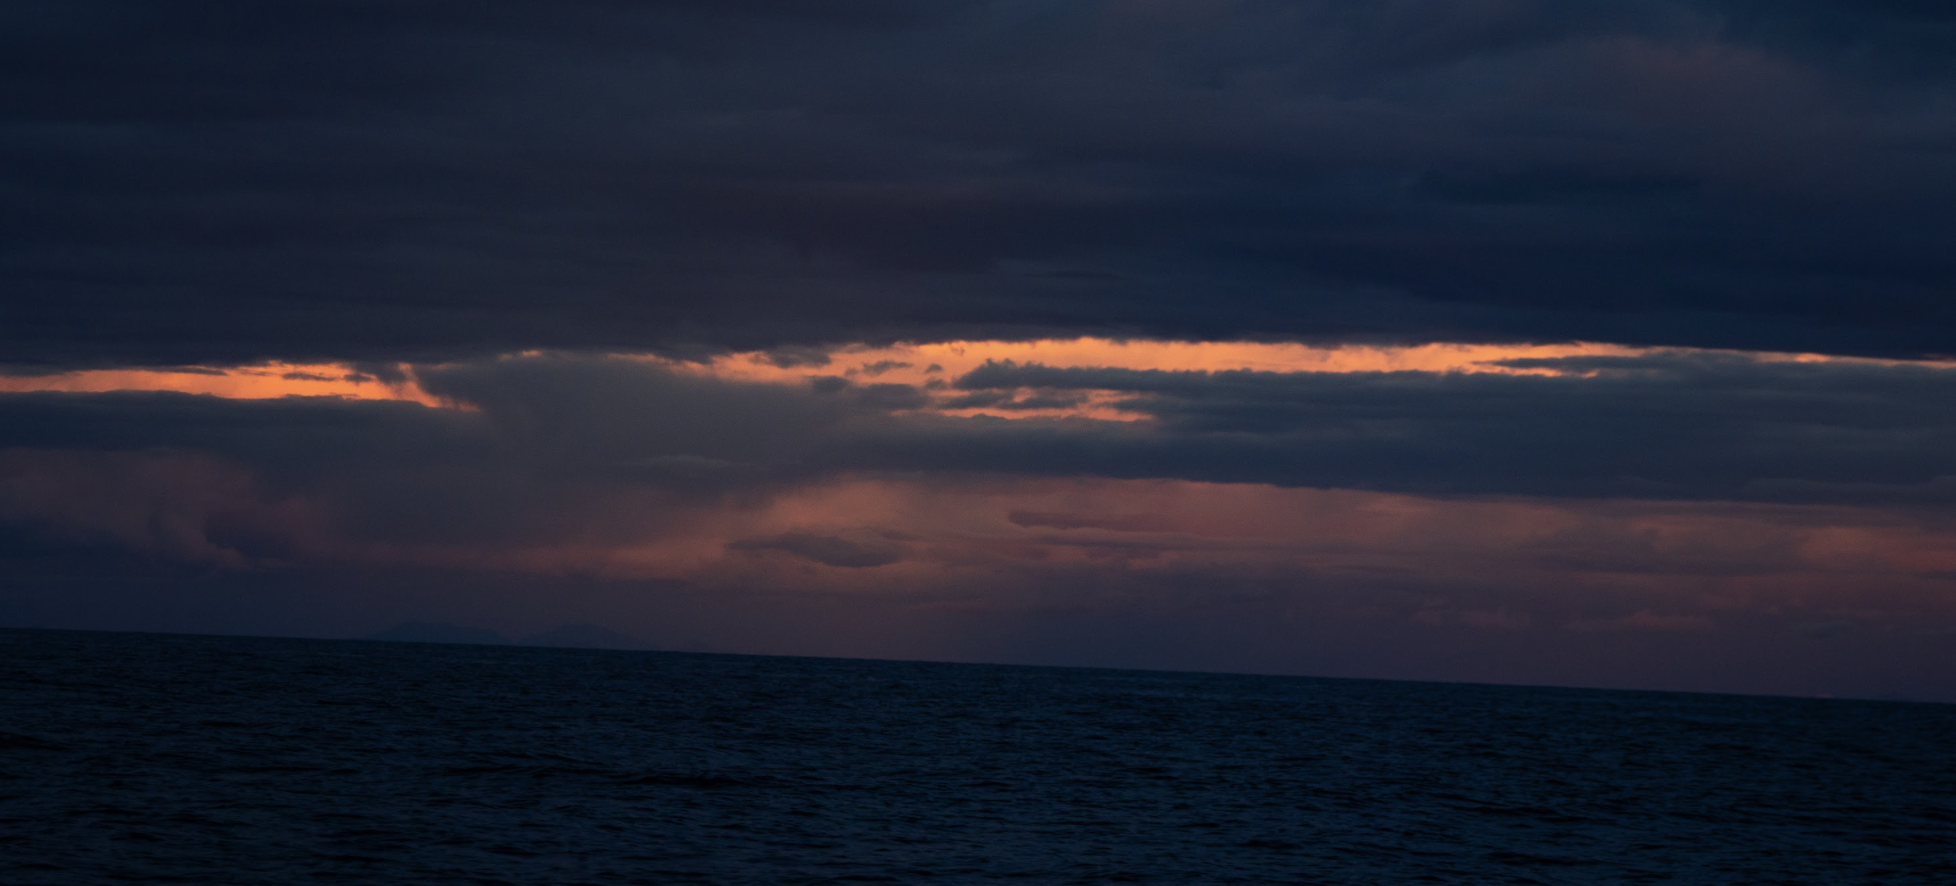 dark clouds while sailing